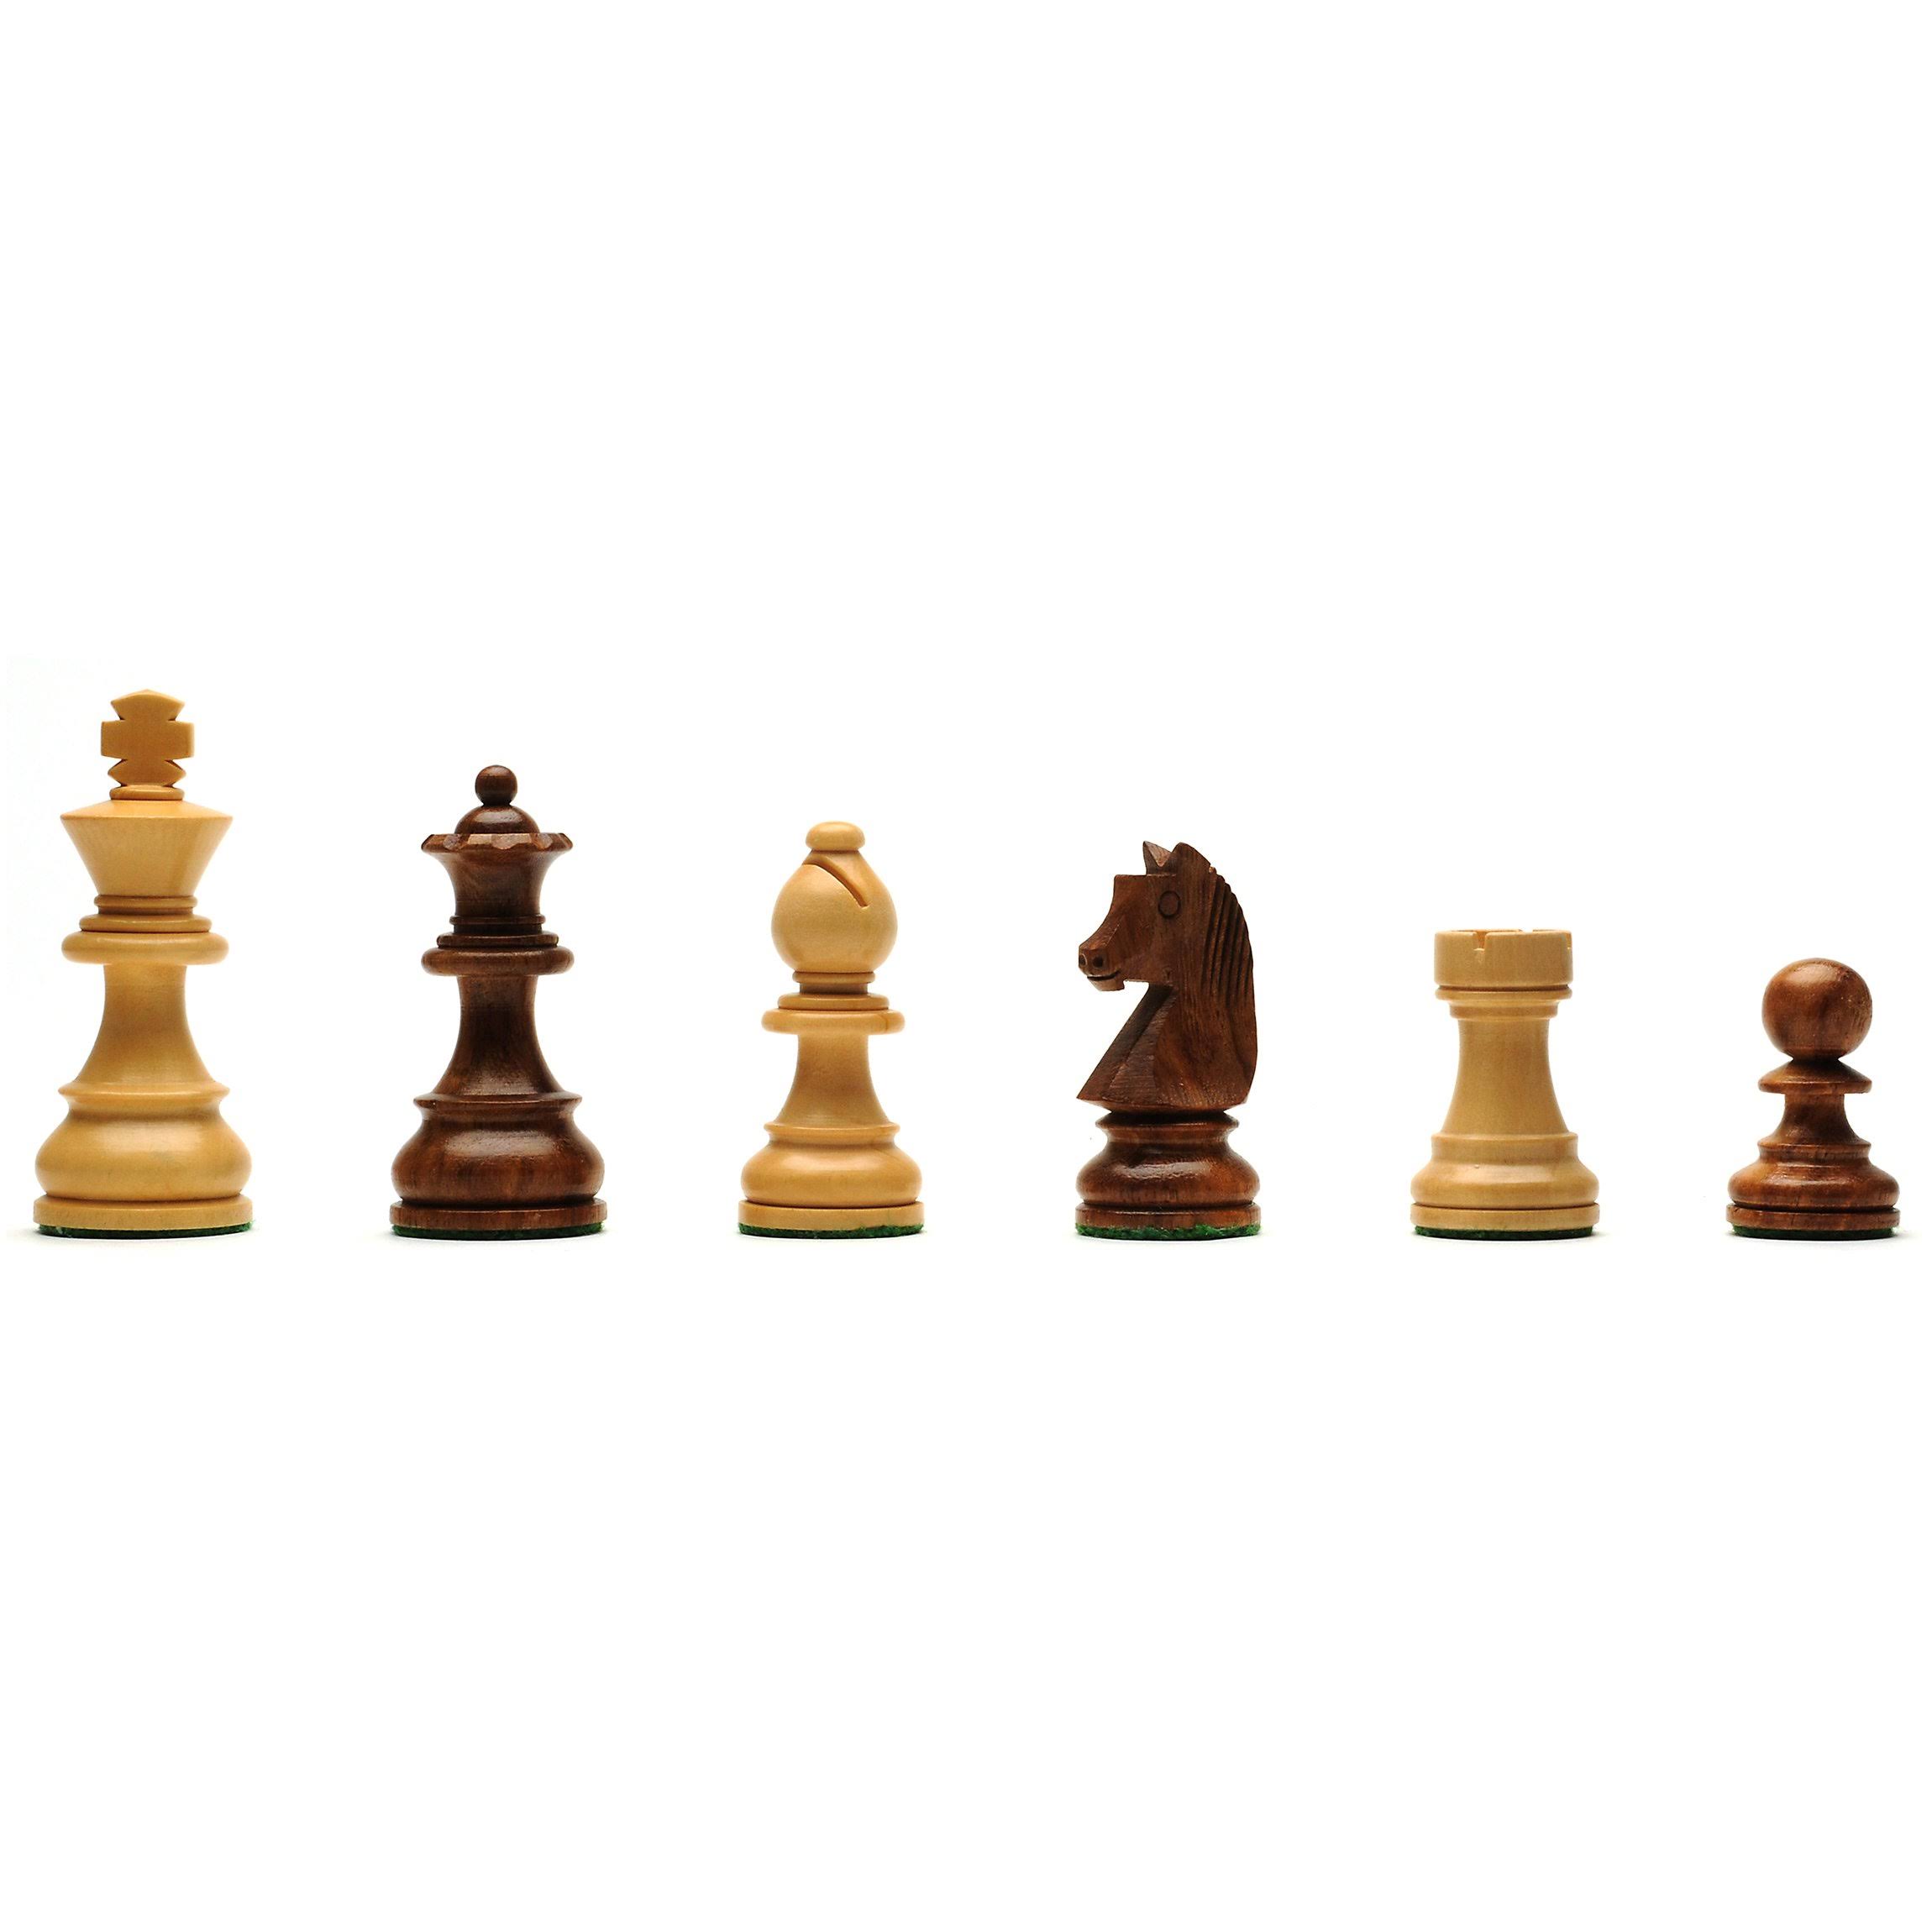 Traditional Staunton Chess Pieces - 03-2130